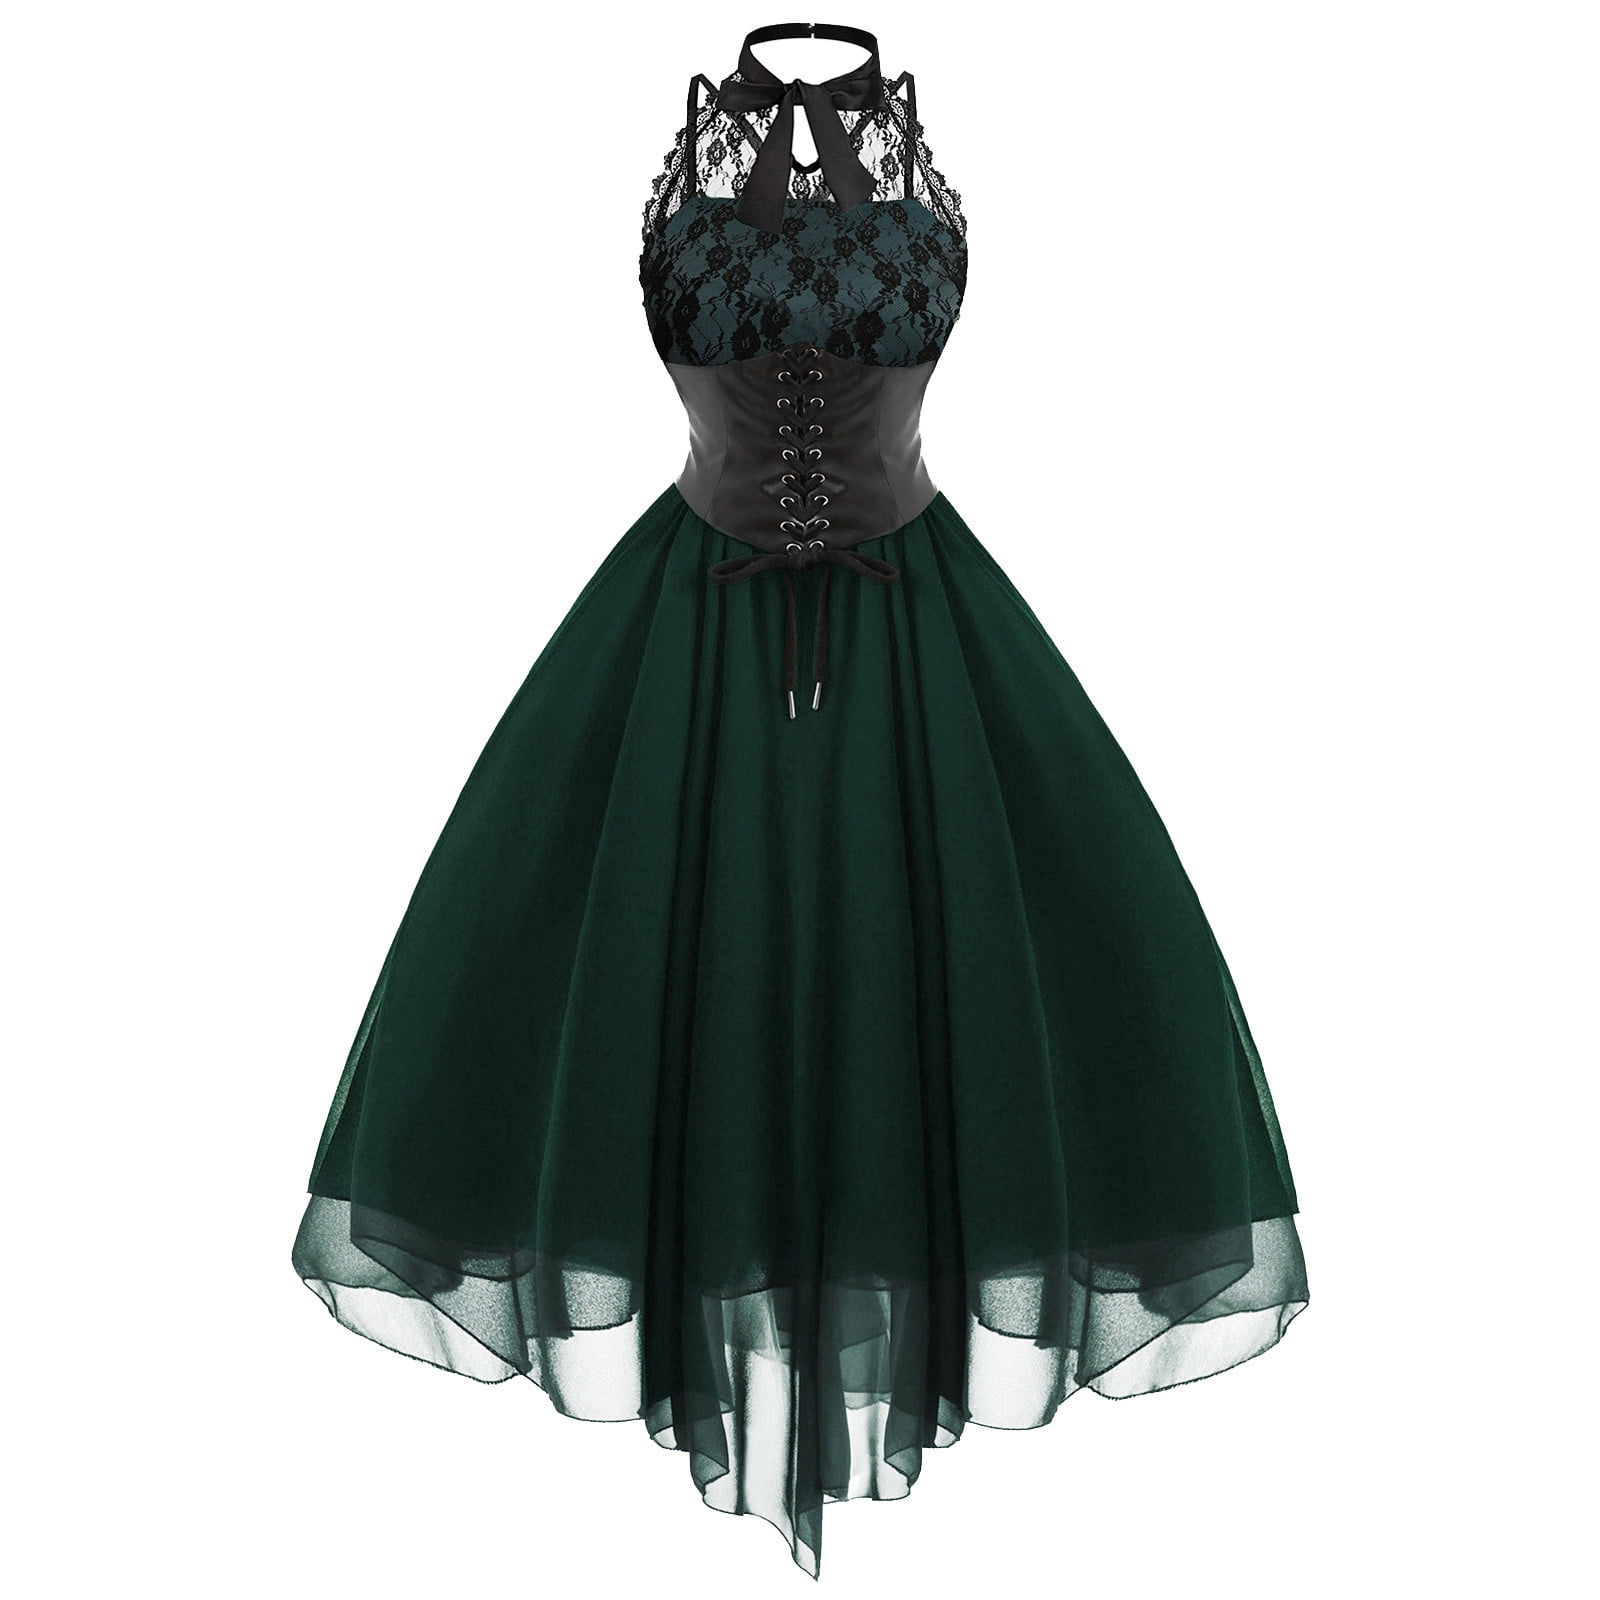 Women's Goth Corset Dress Lace Halter Emo Sleeveless Gothic